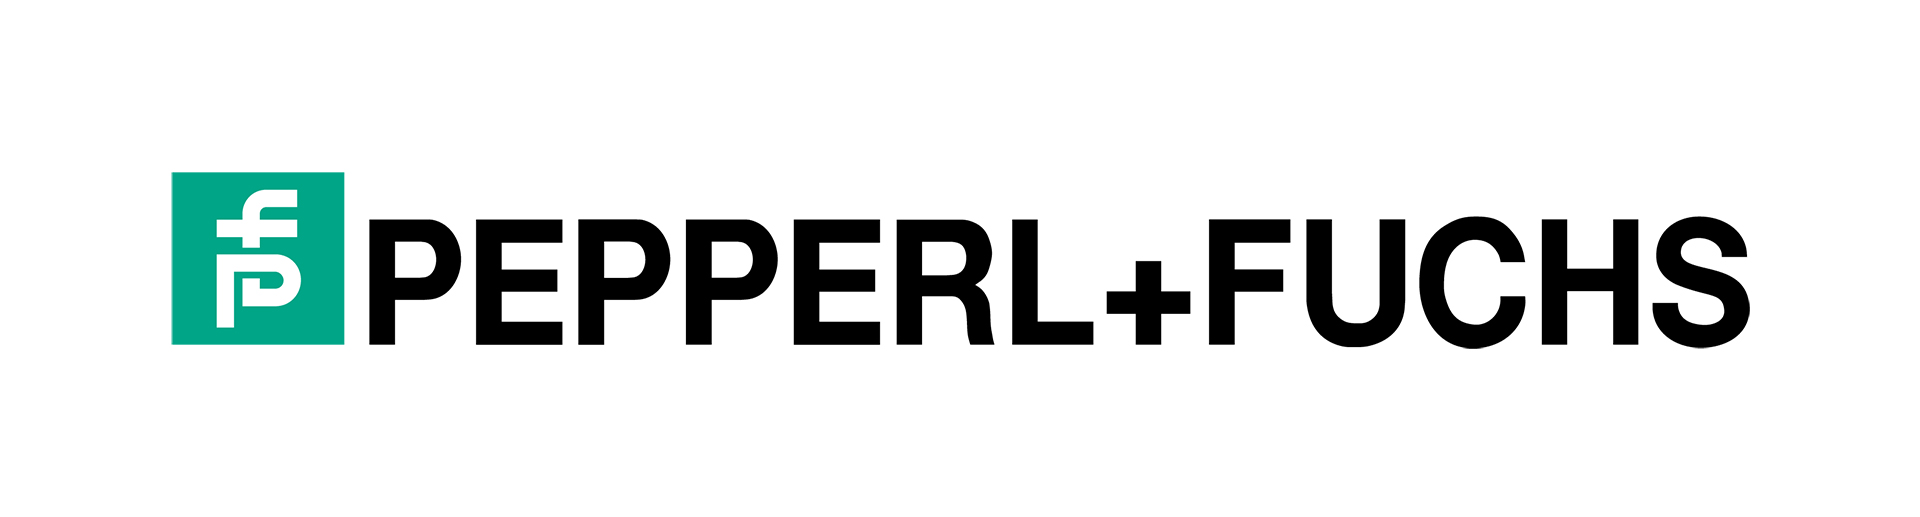 PepperlFuchs logo > Dassault Systèmes